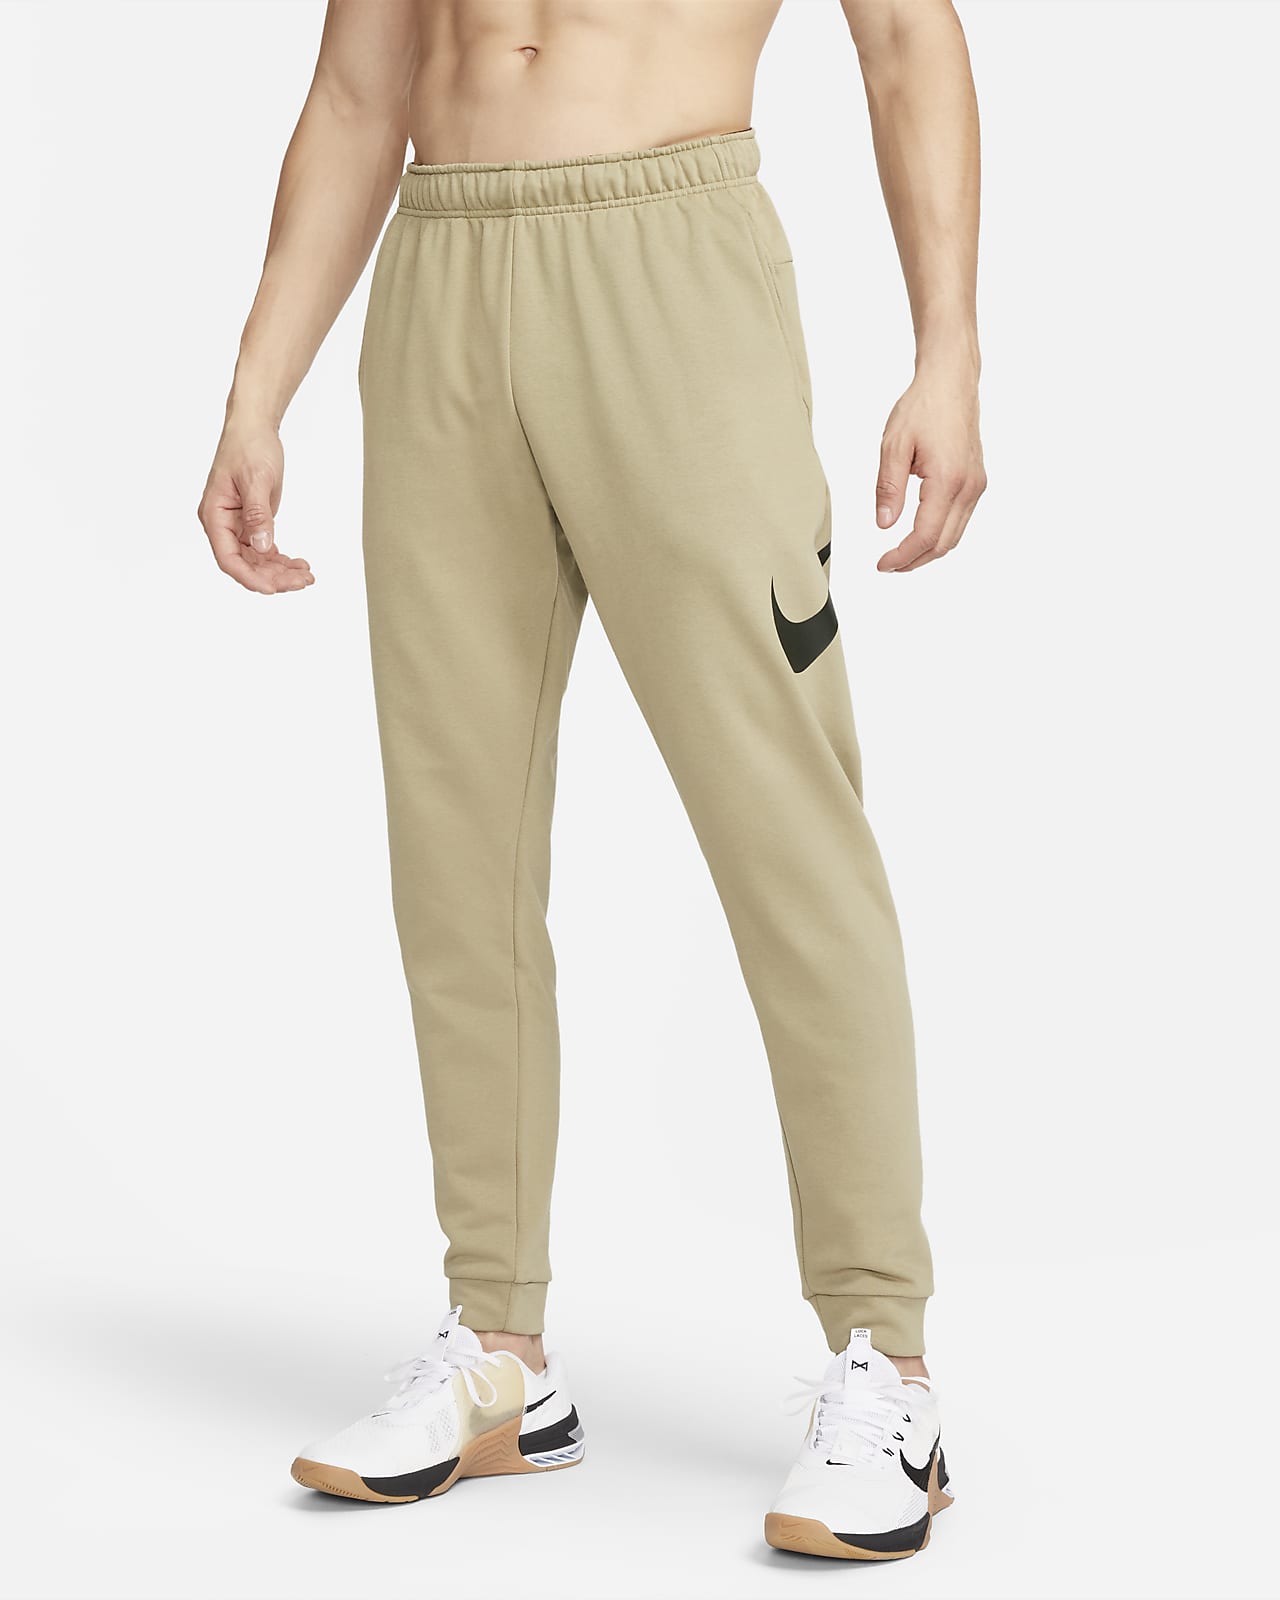 Amazon.com: Nike Boys' Sport Training Pants (Medium, Black/Smoke Grey) :  Clothing, Shoes & Jewelry